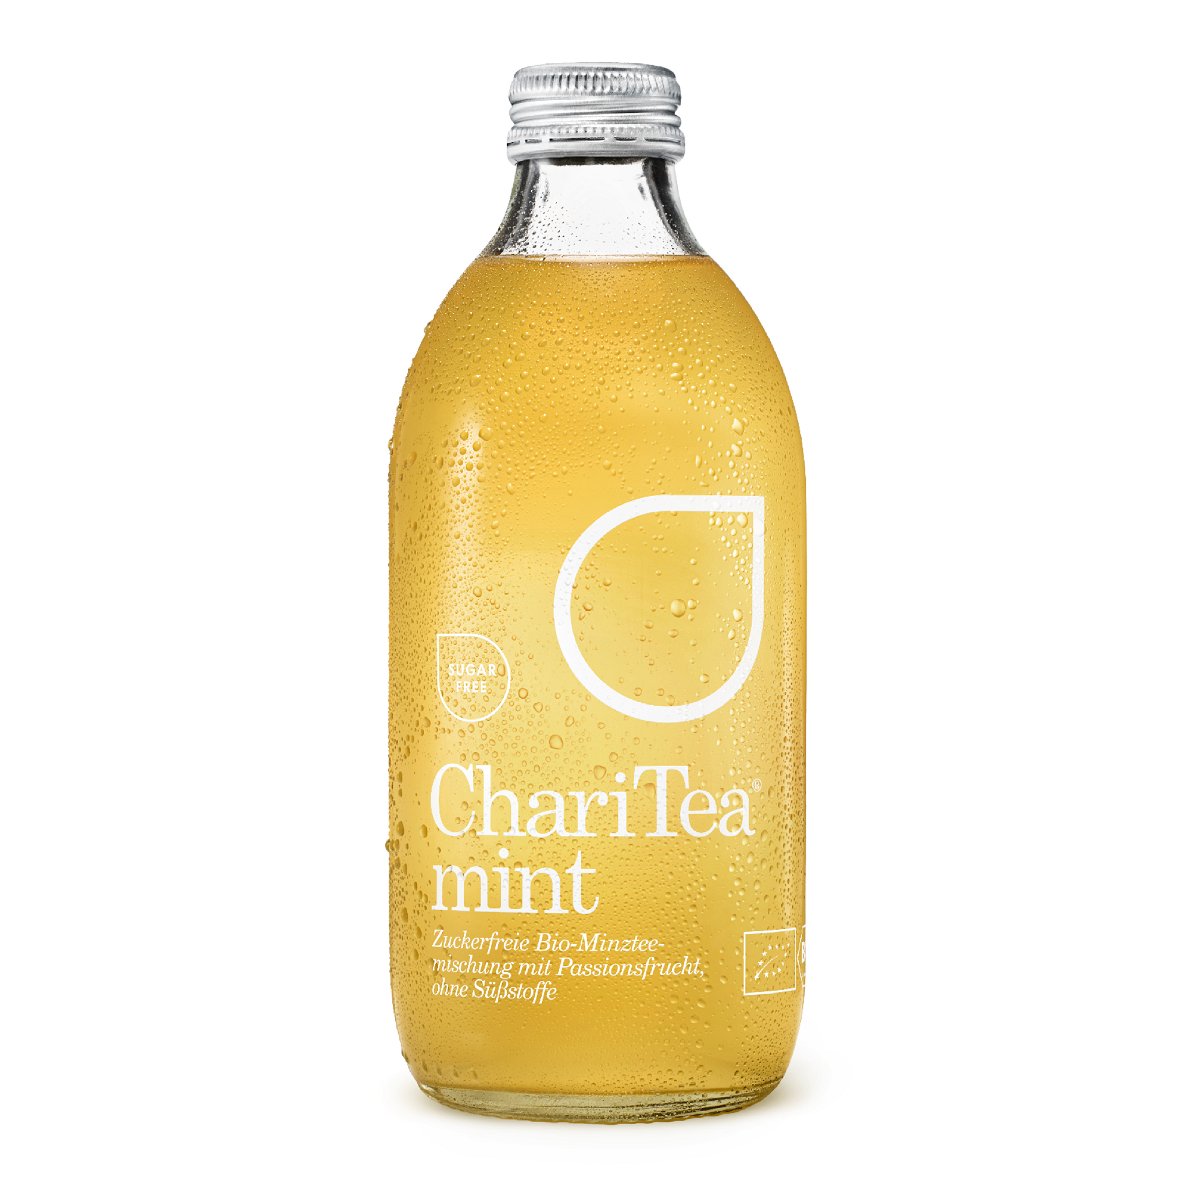 ChariTea Sugar Free Organic Iced Tea with Mint